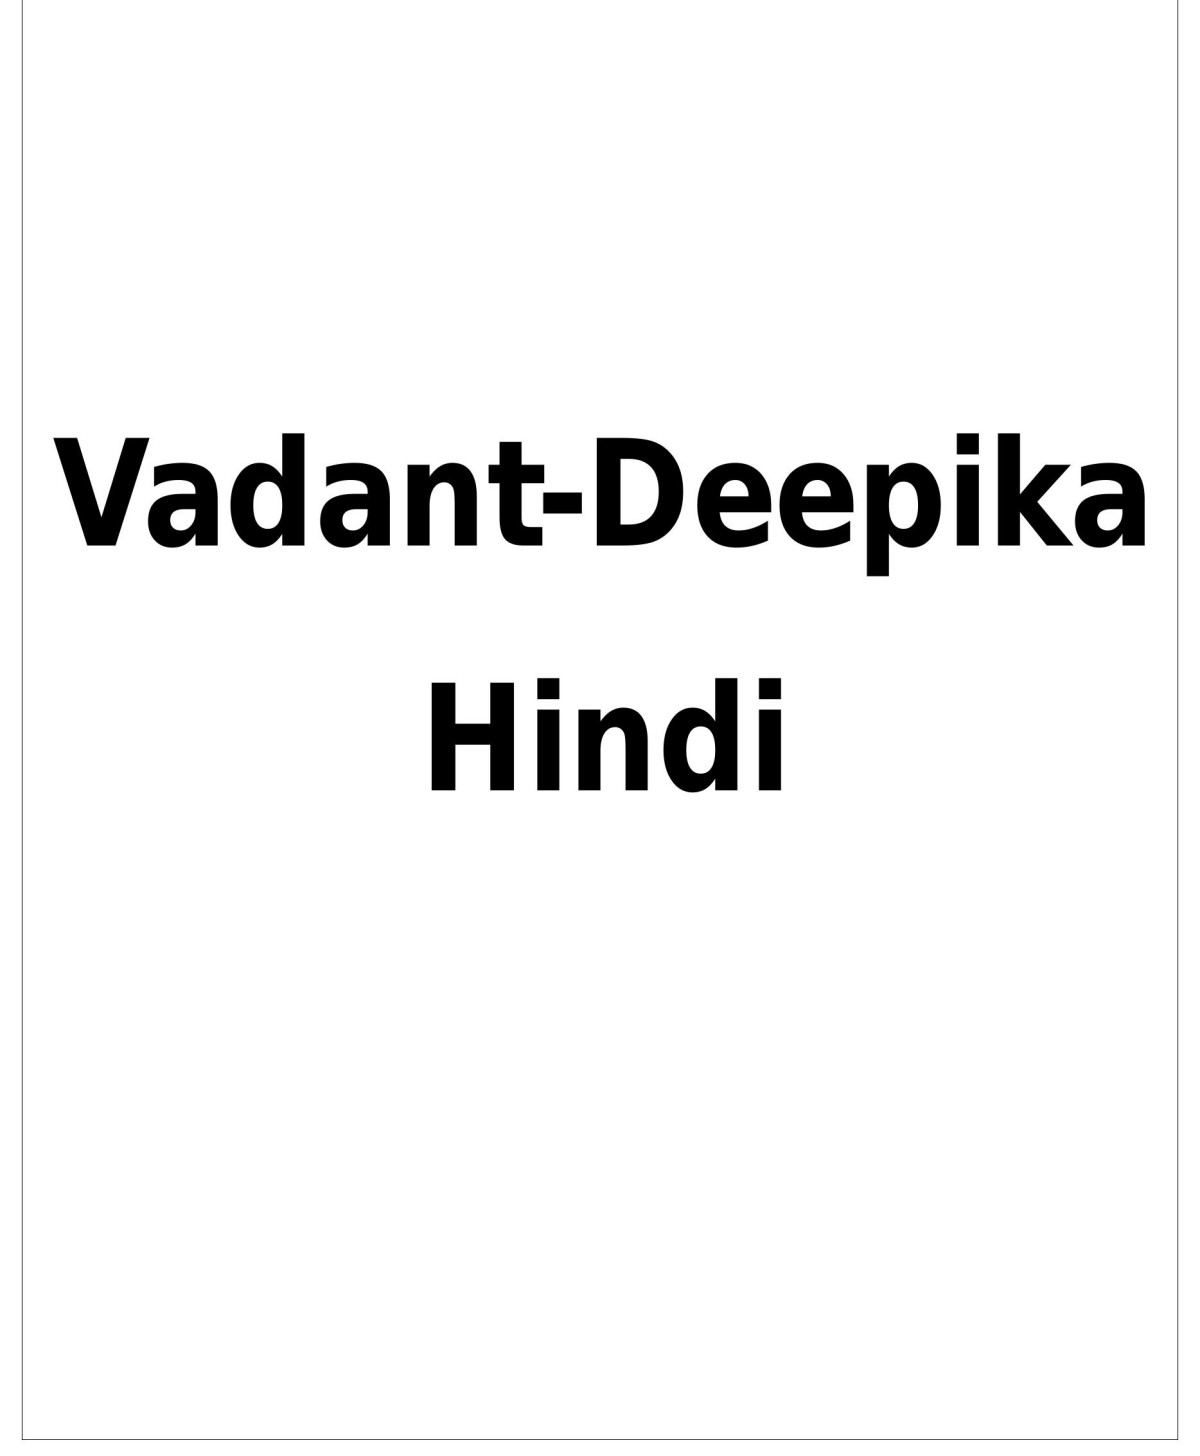 Vedant Deepika